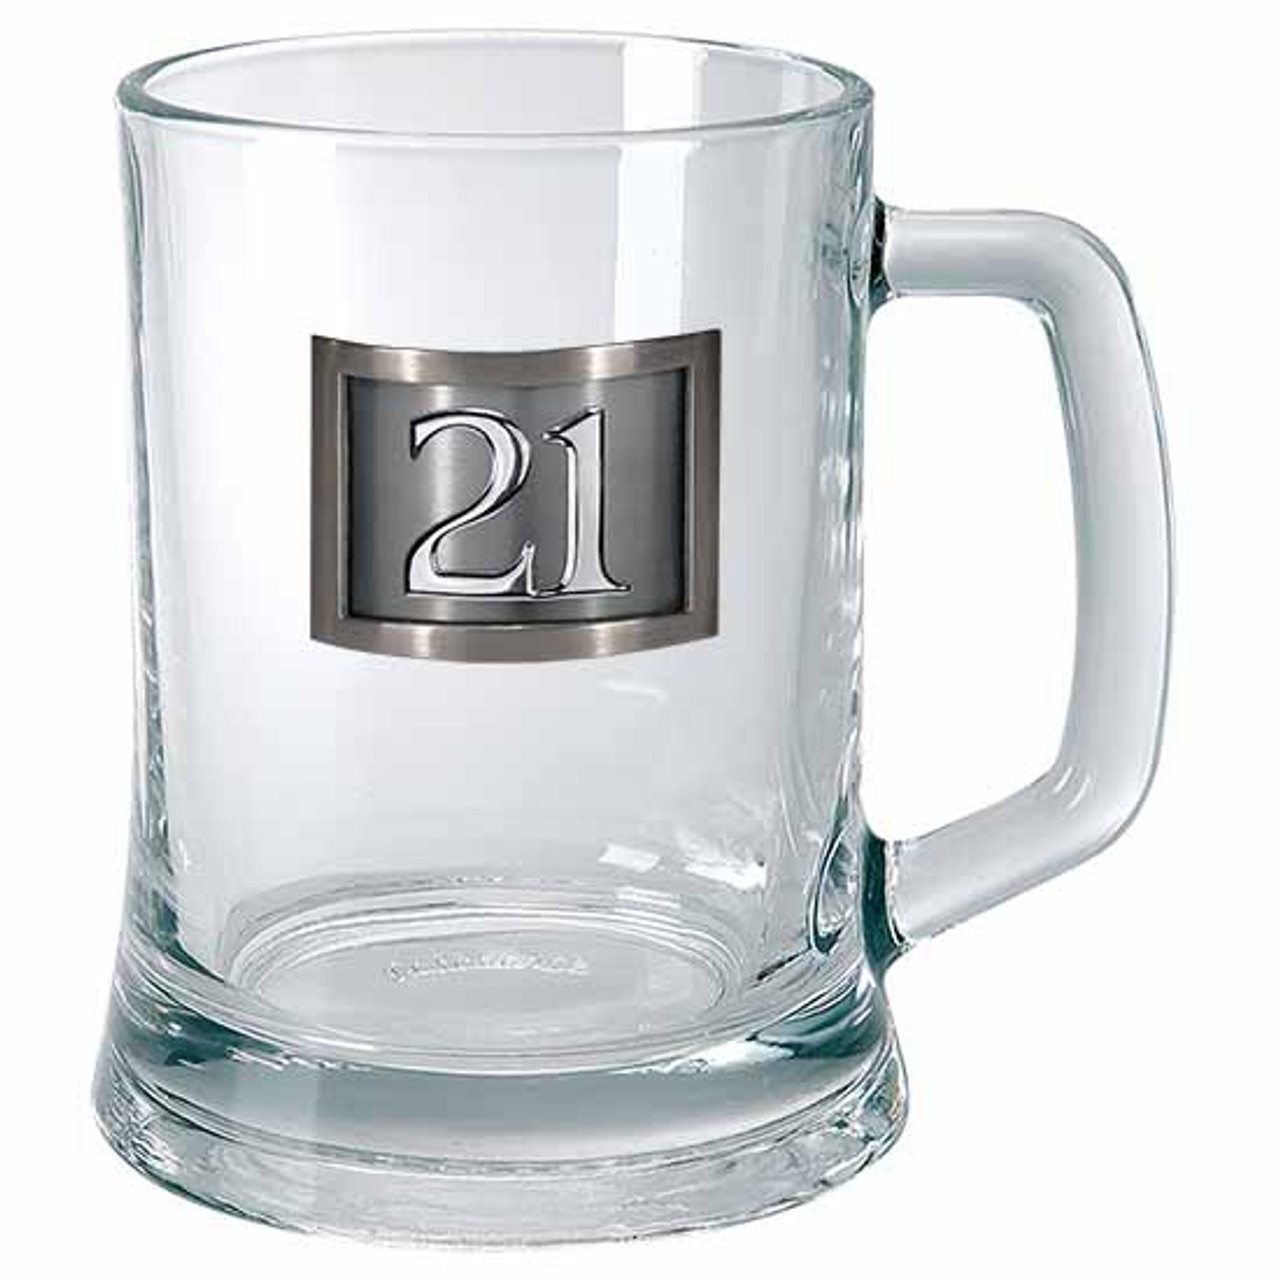 Personalized 21st Birthday Glass Beer Mug